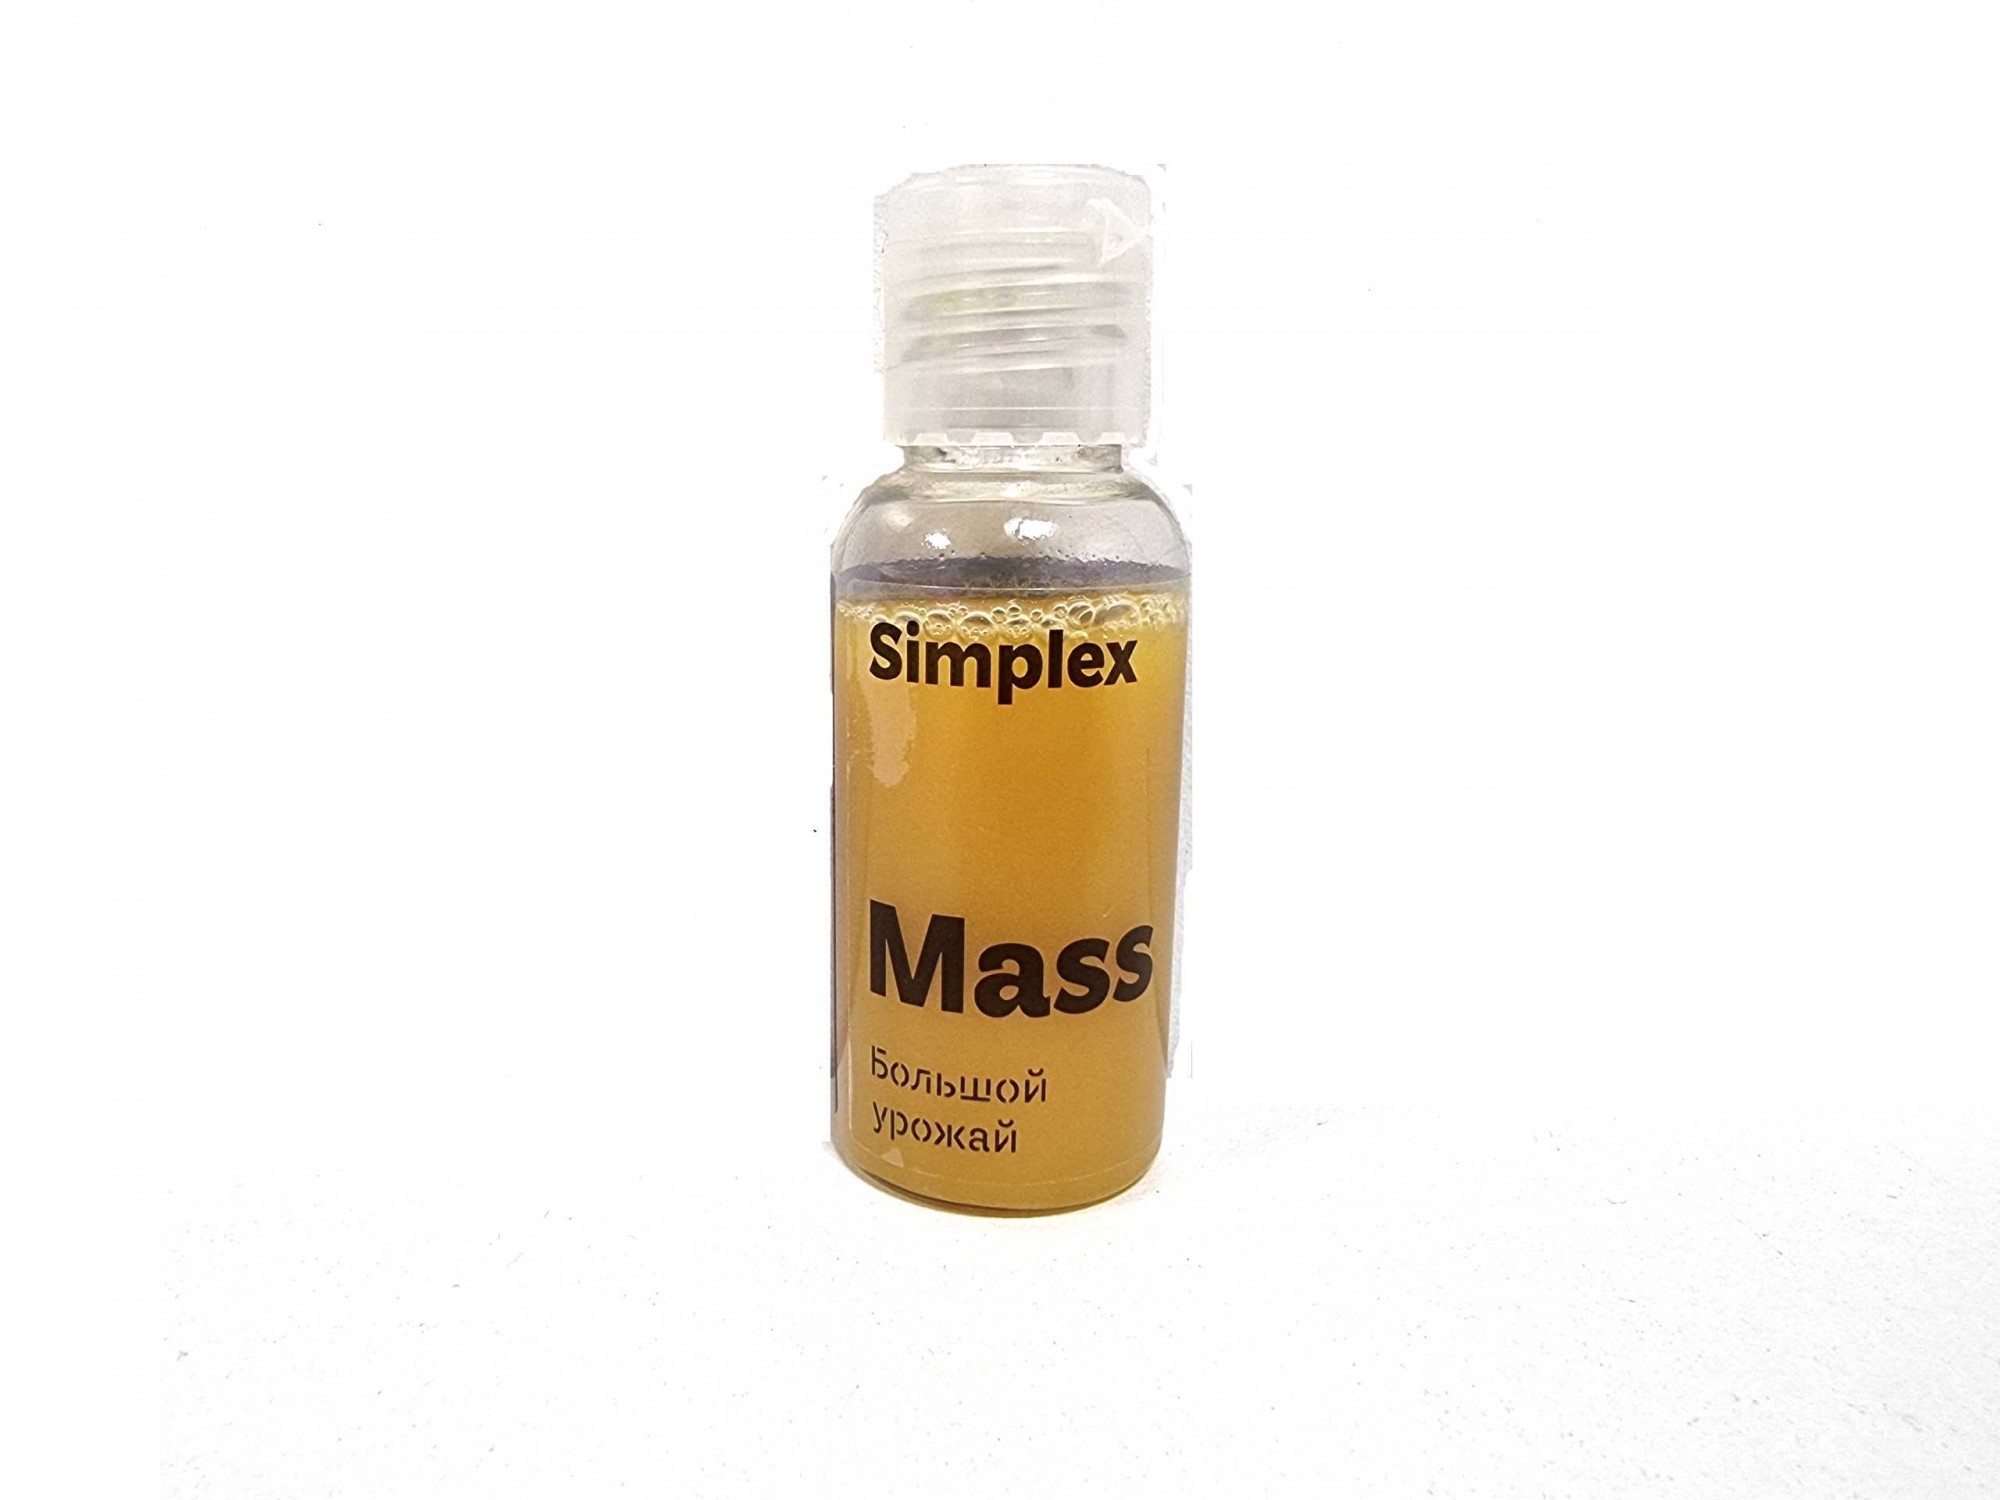 Simplex Mass